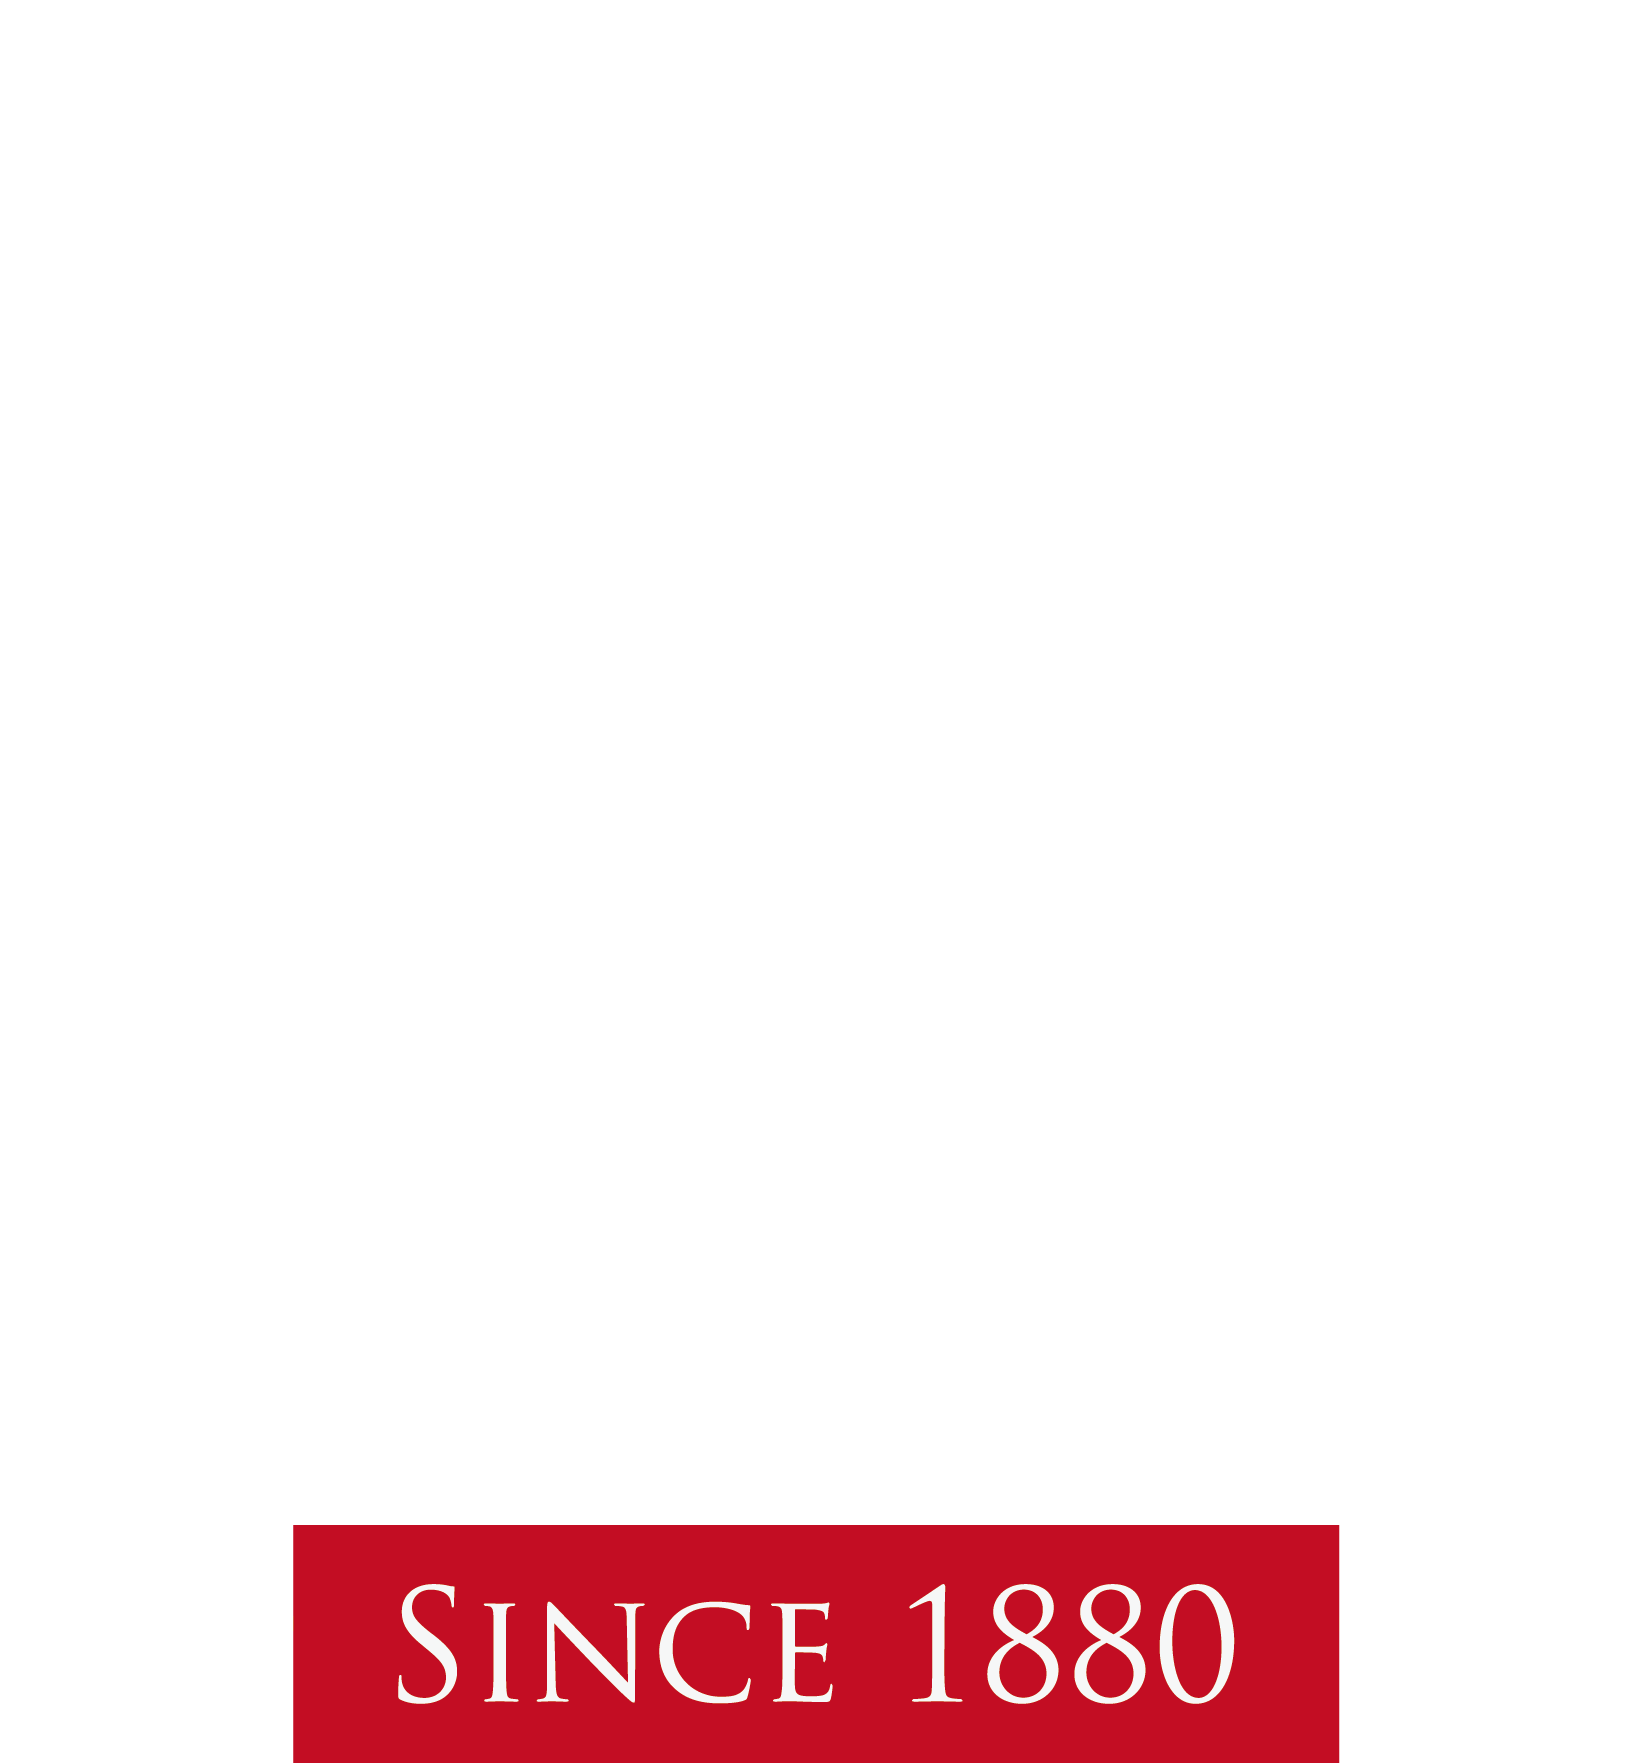 Duveau Wines